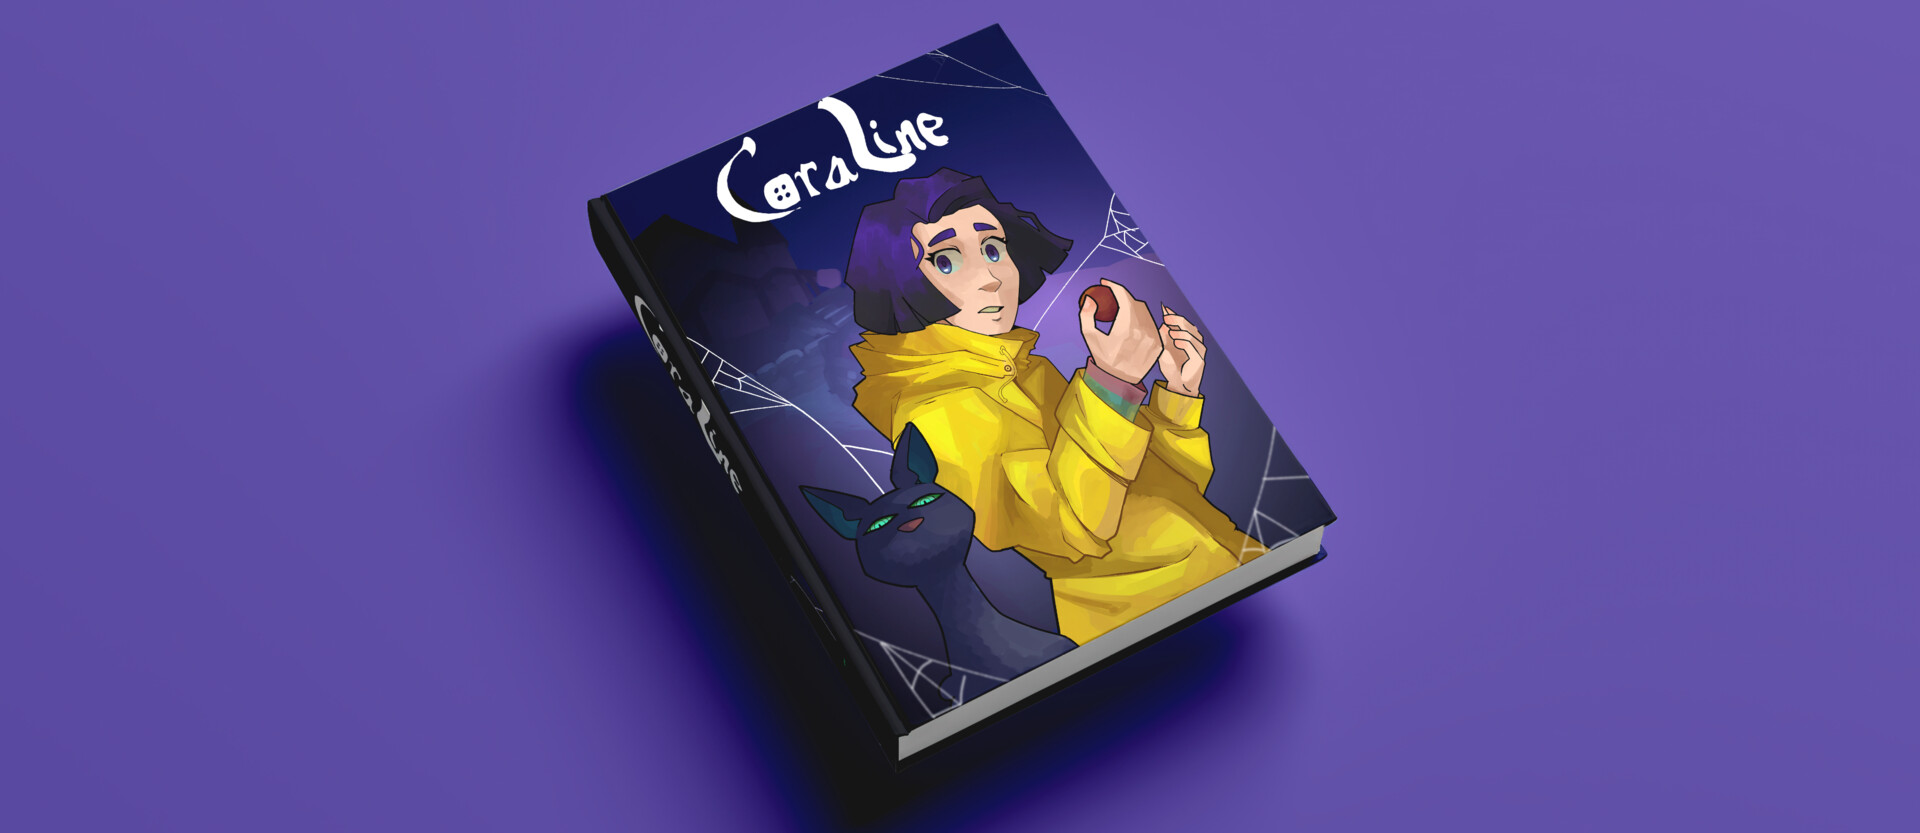 ArtStation - Coraline book cover